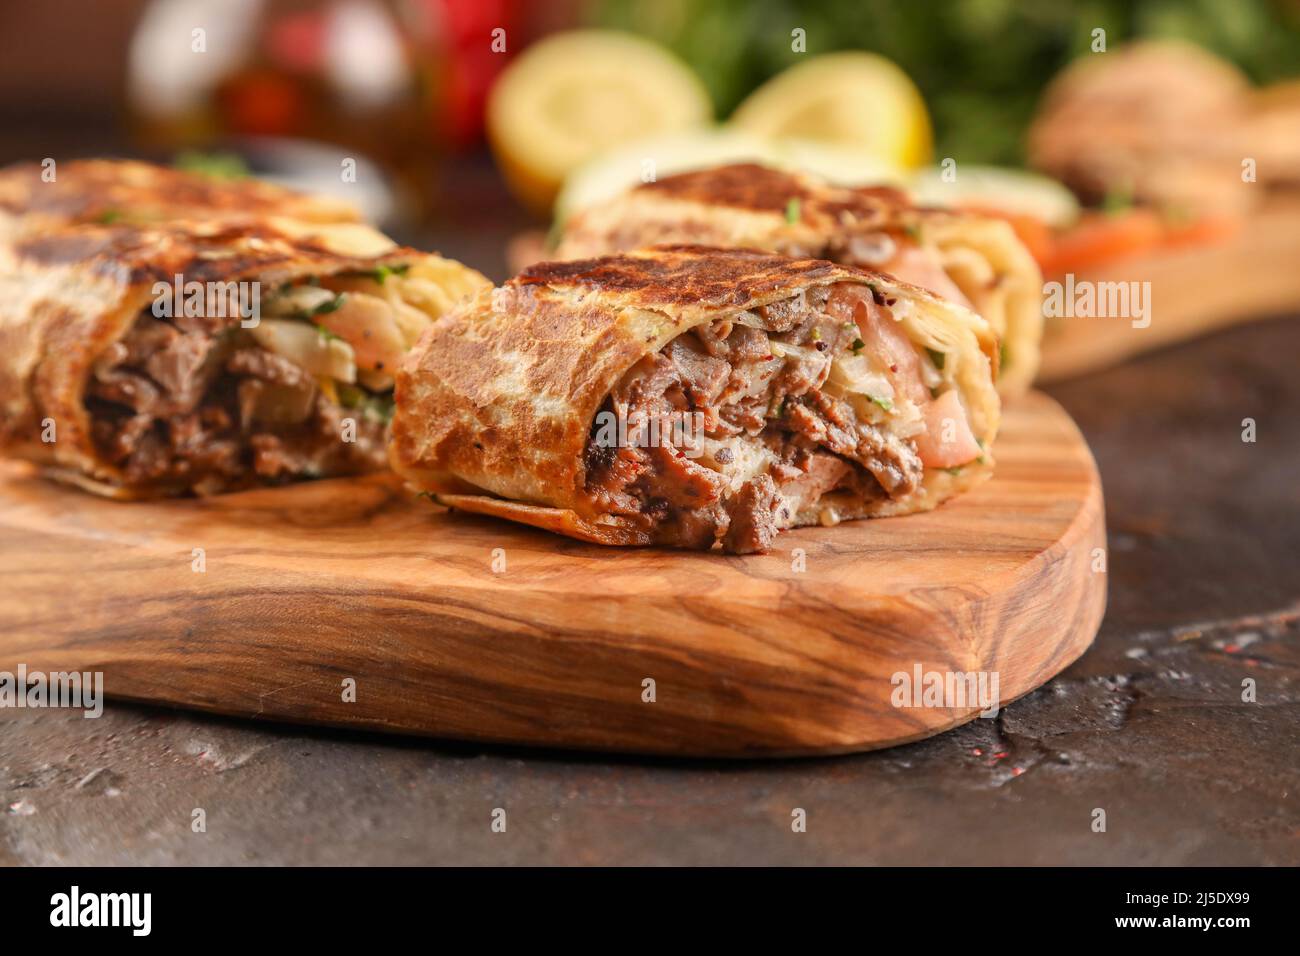 Beef shawarma durum doner kebab copy space. kafta shawarma beef pita wrap roll sandwich traditional arab mid east food Stock Photo